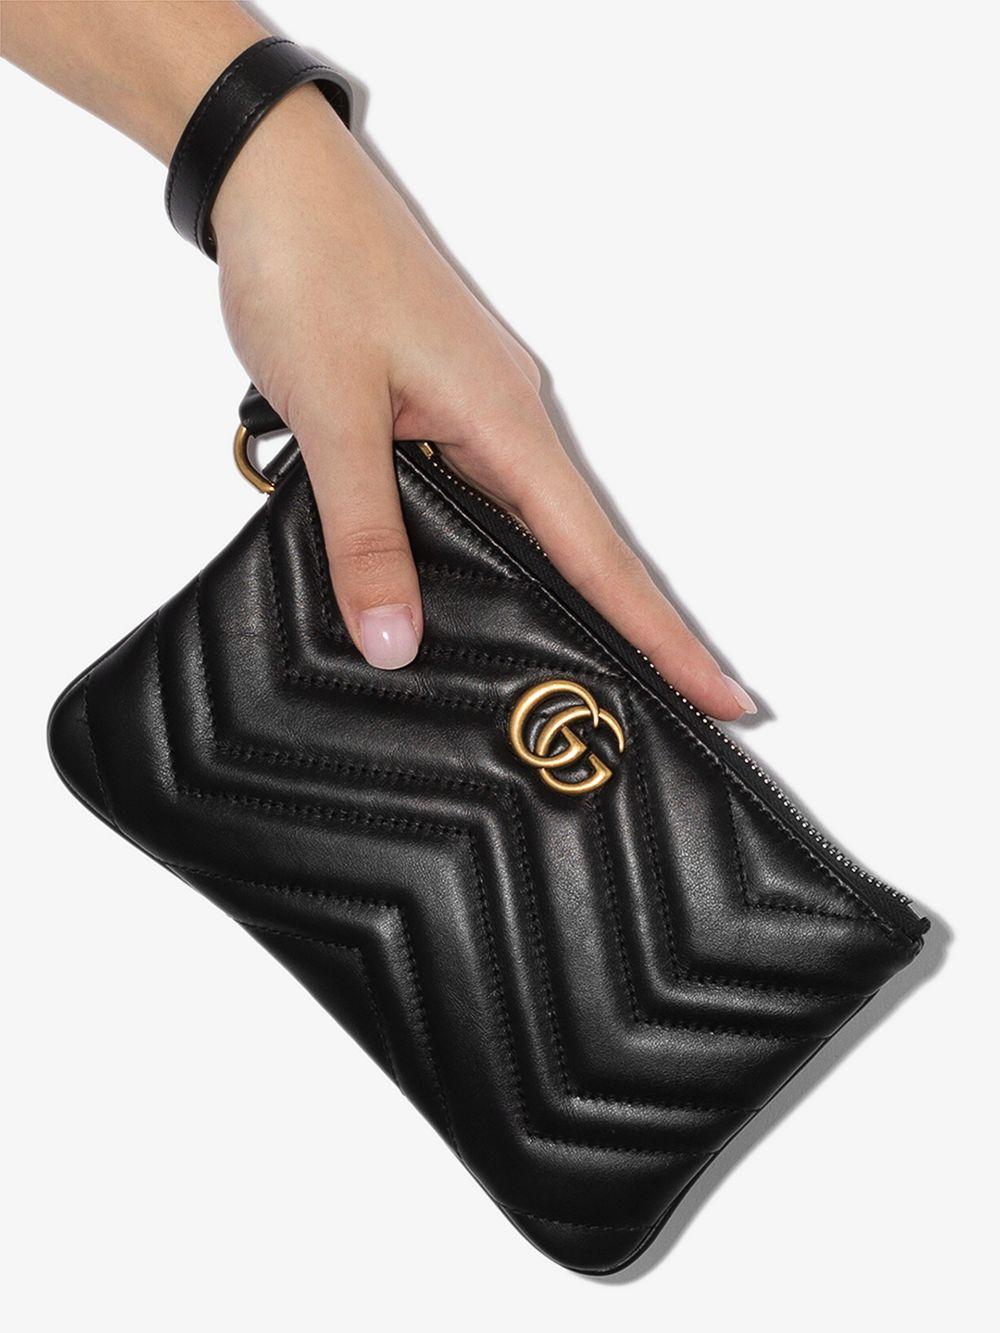 brandwond Aktentas Vlieger Gucci Marmont Quilted Leather Wrist Wallet in Black | Lyst